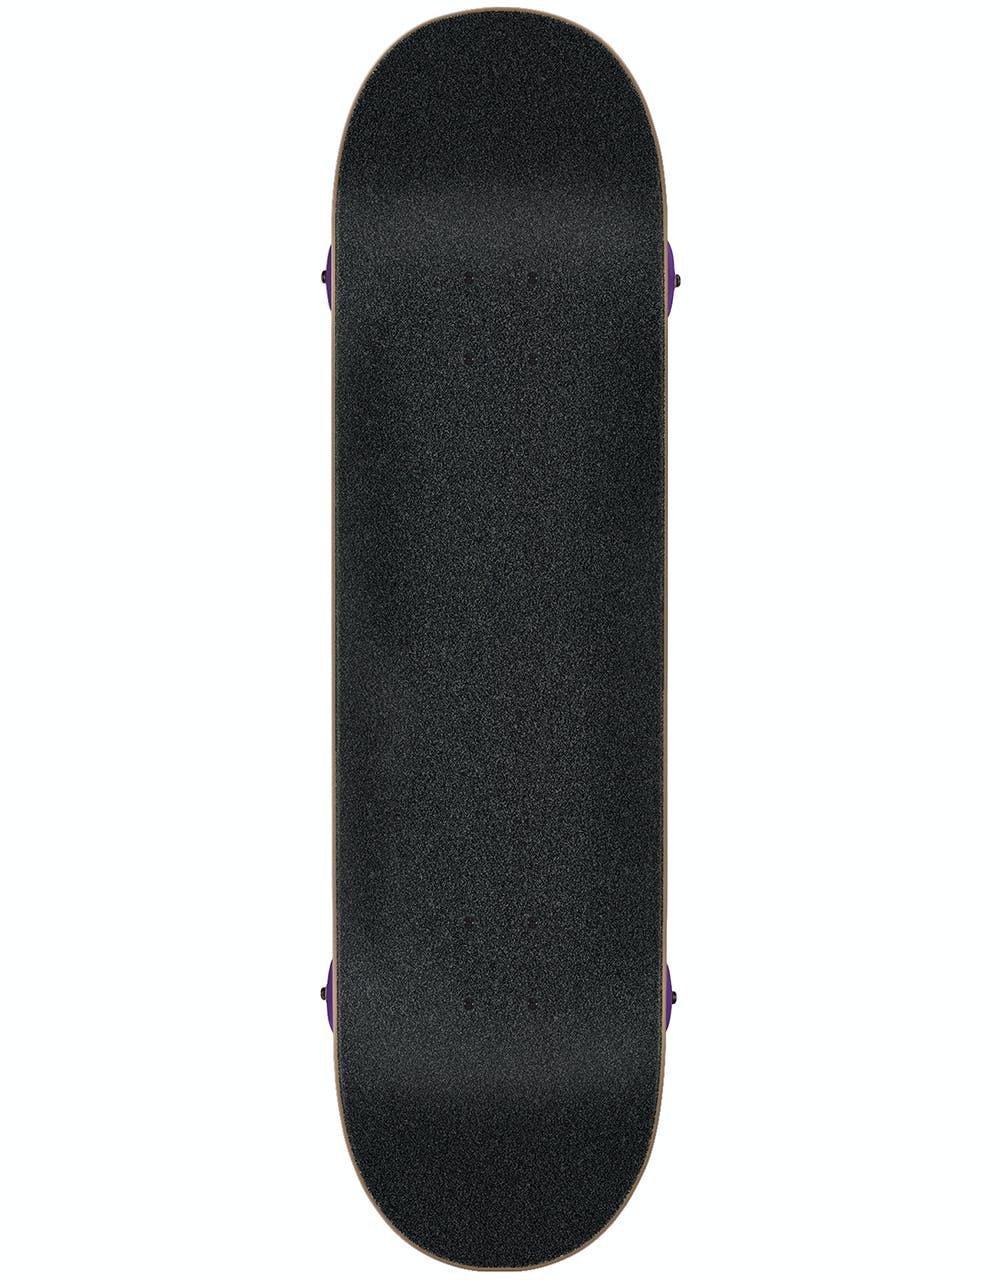 Santa Cruz Foam Dot Complete Skateboard - 7.75"